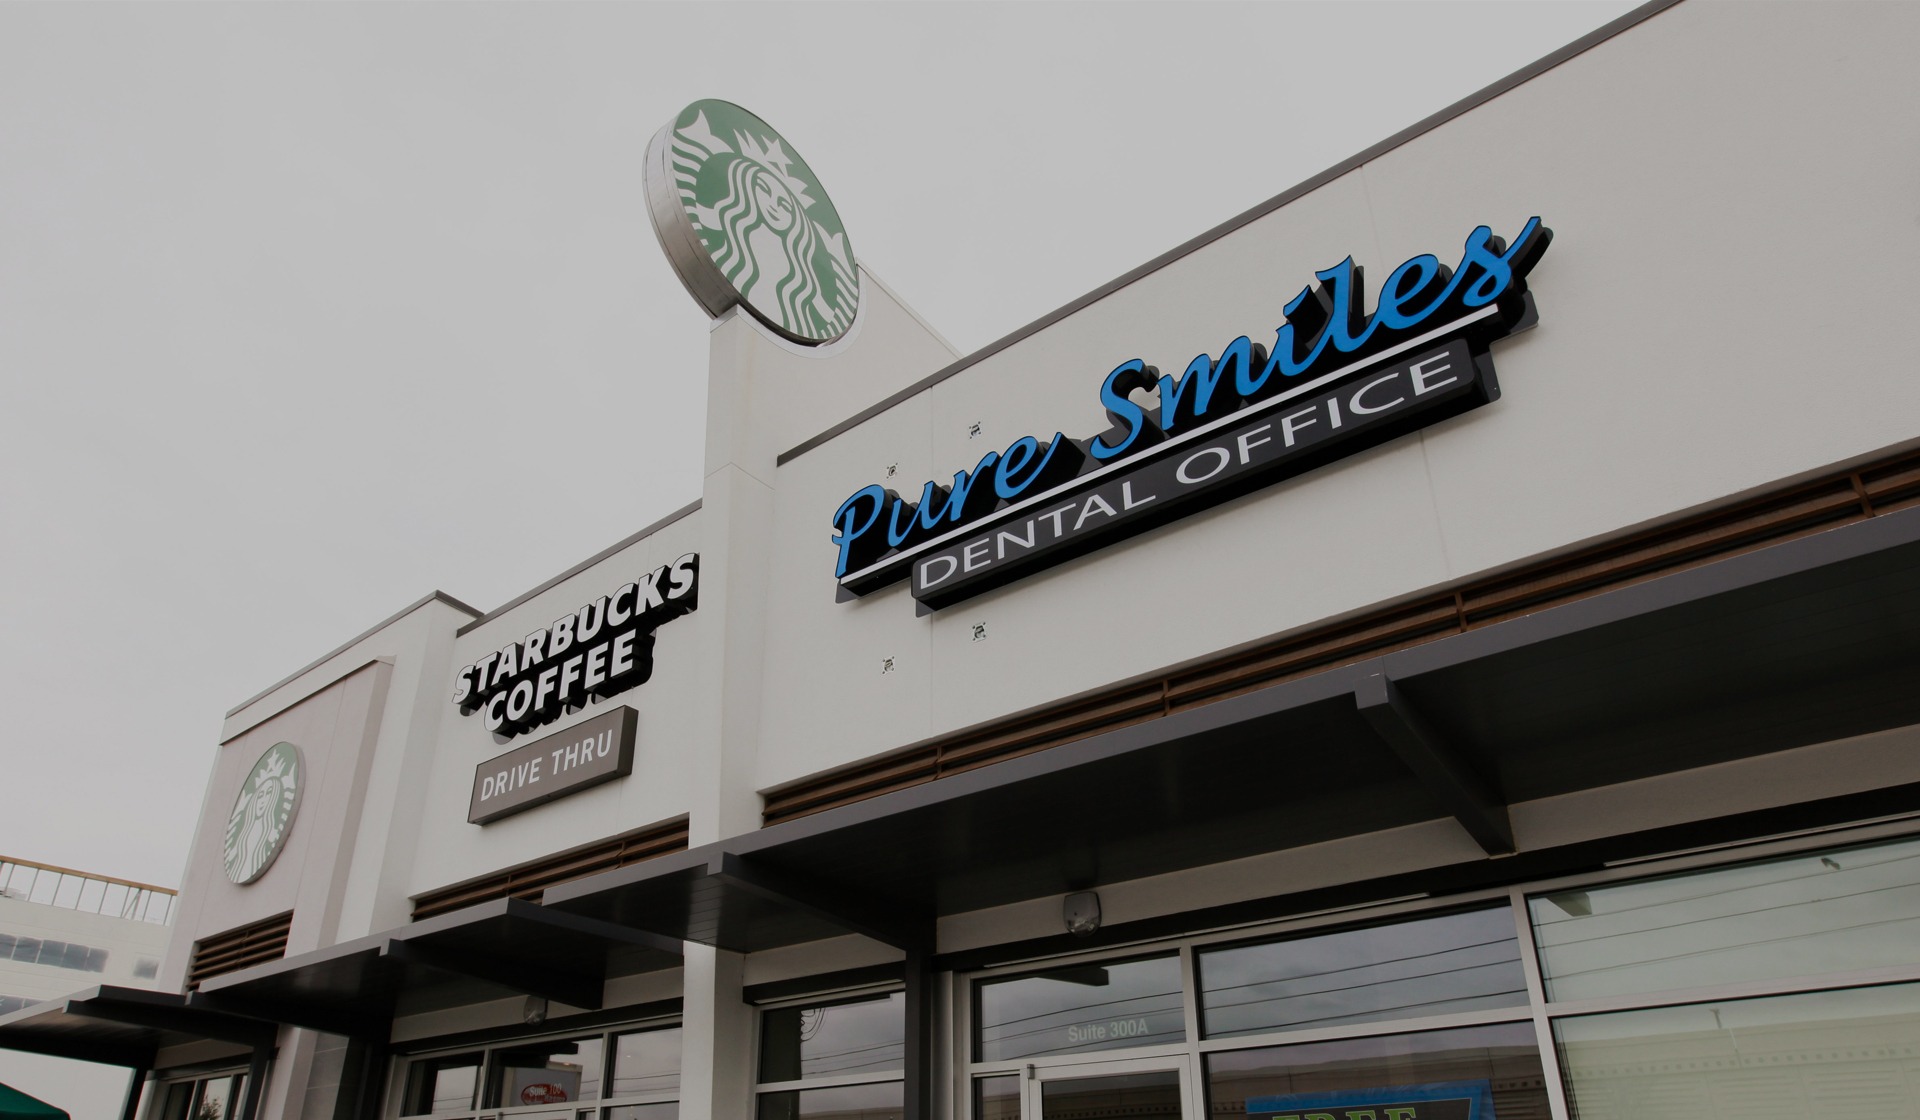 Pure Smiles Dental Office | Katy Texas Dentist